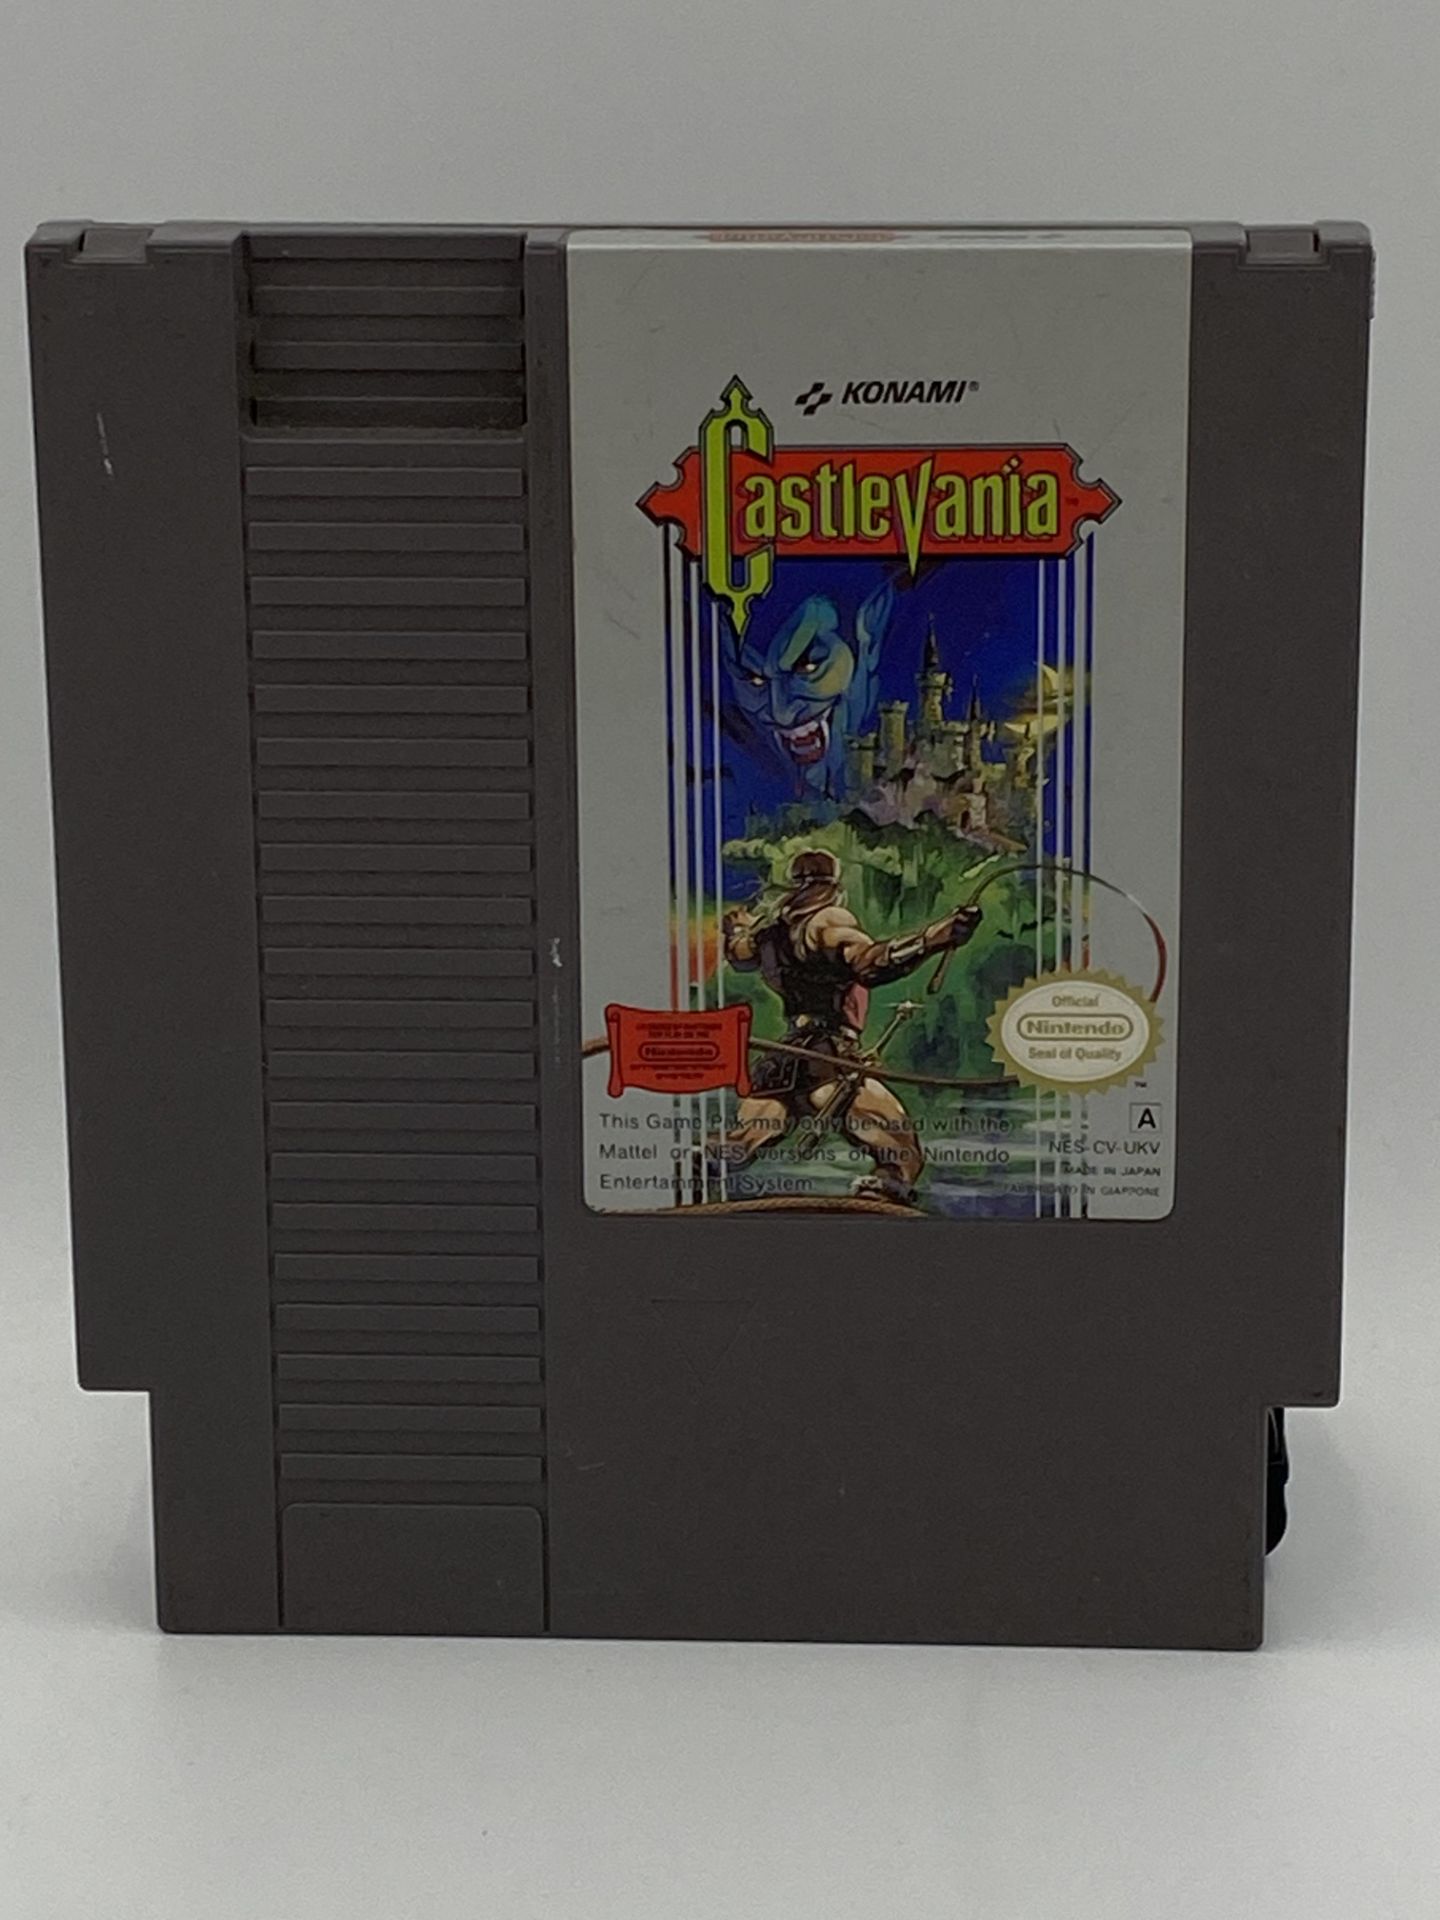 Konami Castlevania NES cartridge